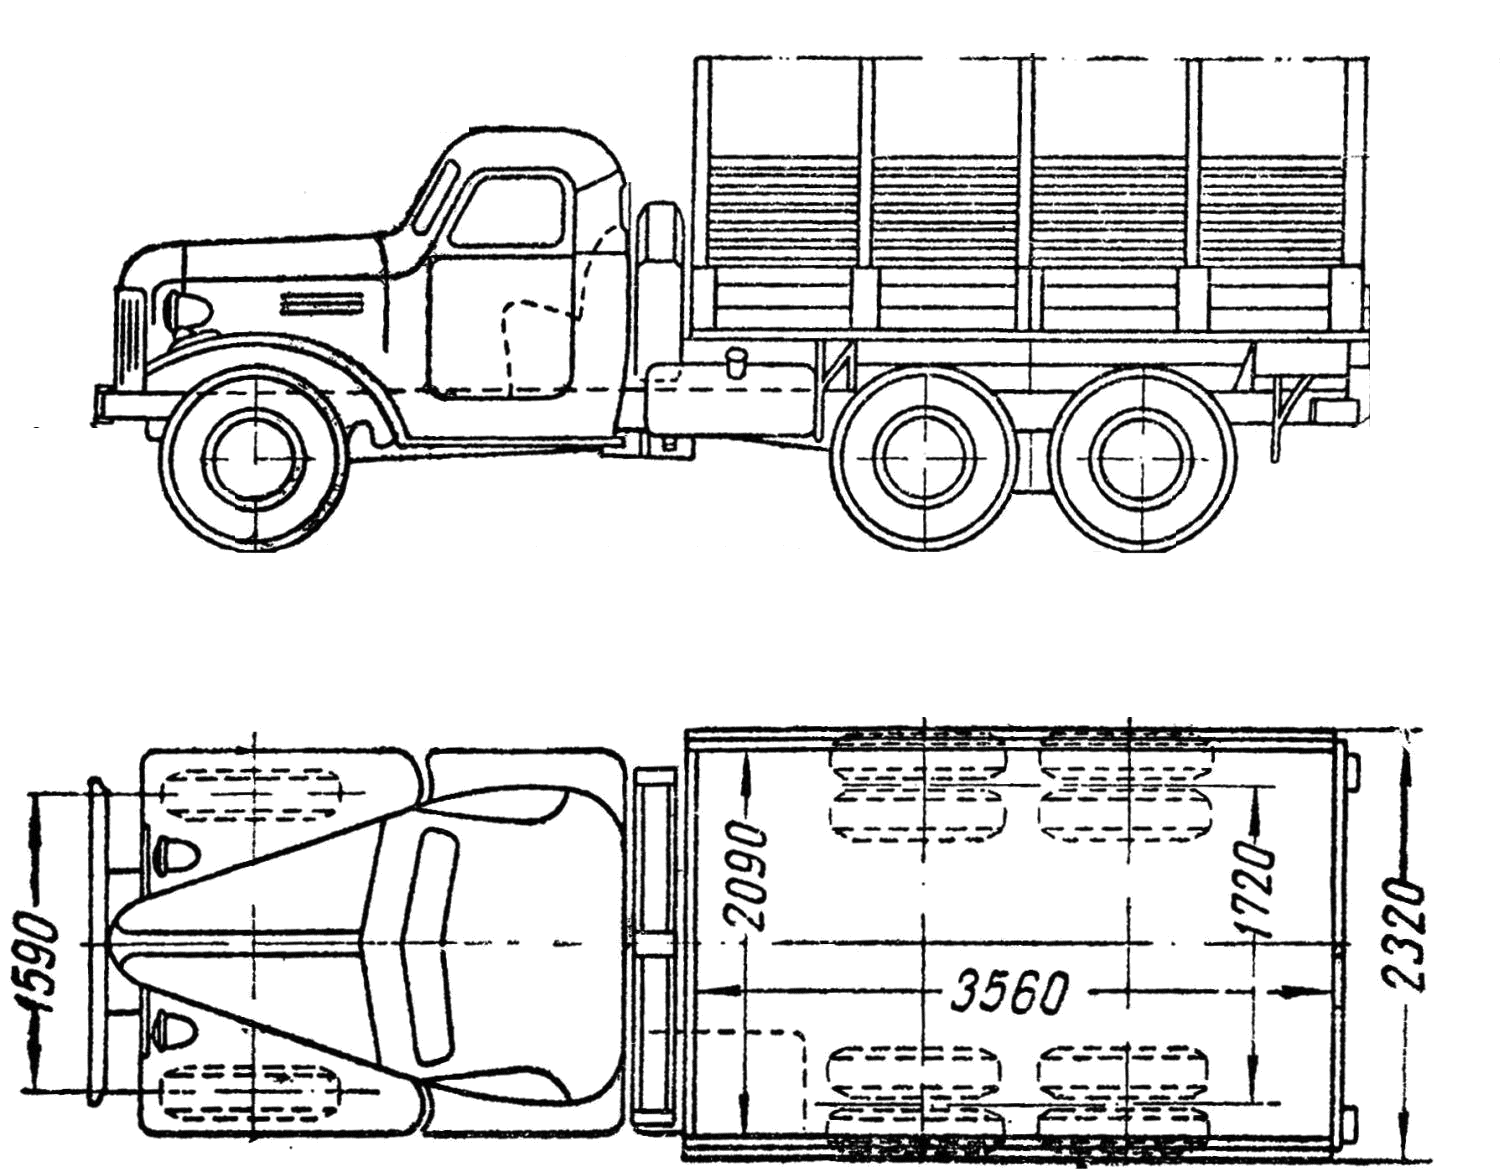 CAR blueprints - 1948 ZIS 151 Truck blueprint